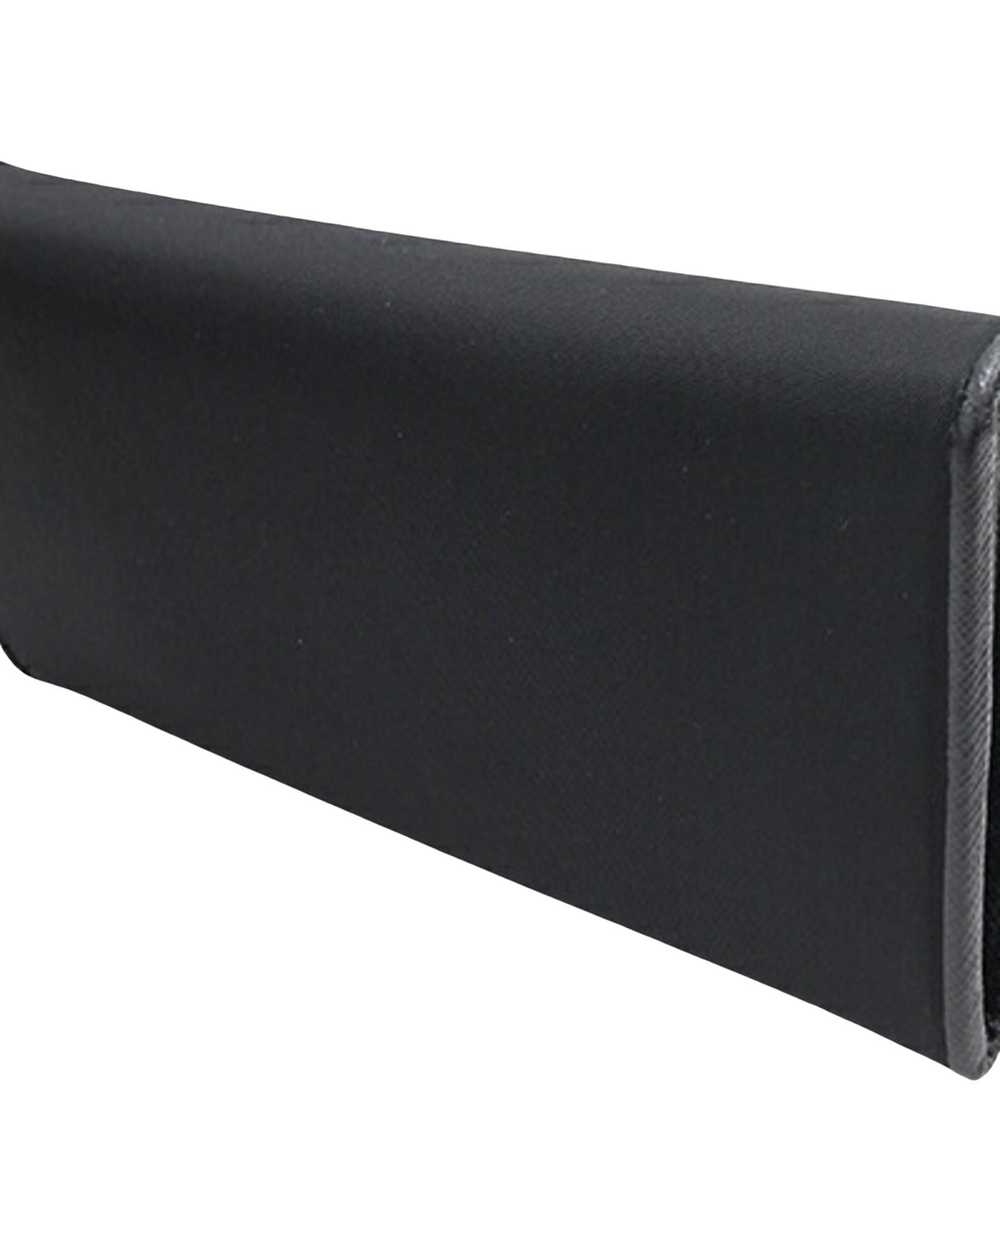 Prada Black Leather Bi-Fold Wallet with Multiple … - image 2